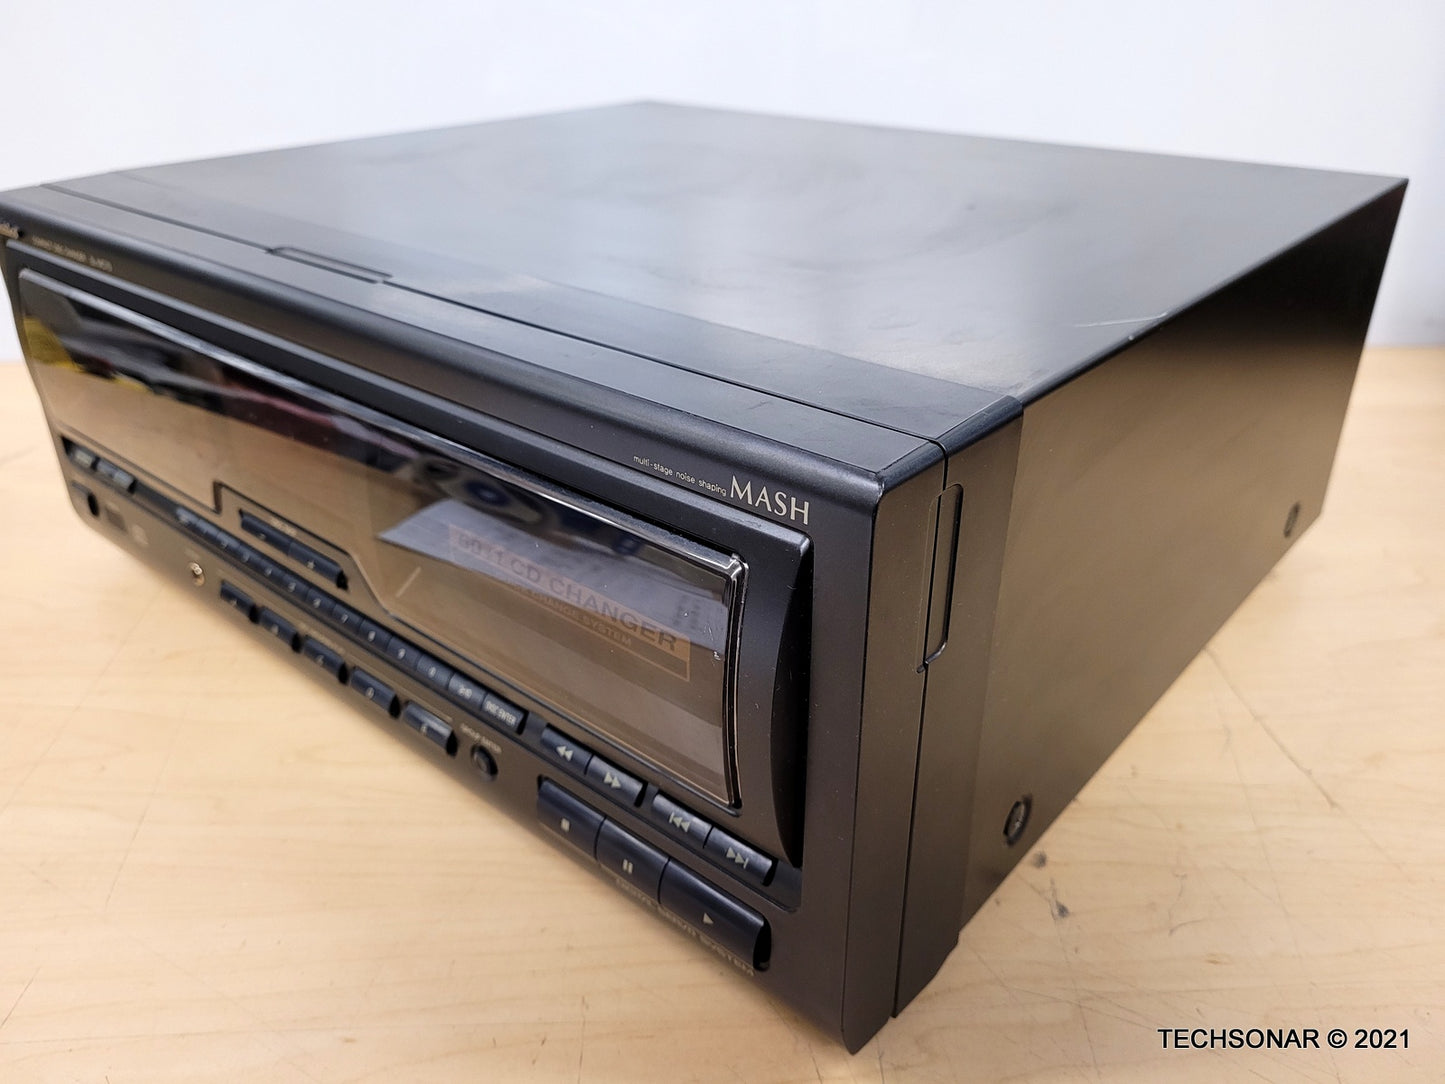 TECHNICS SL-MC70 60+1 Compact Disc Player Jukebox Tested OK - NO Remote Control nor accessories)